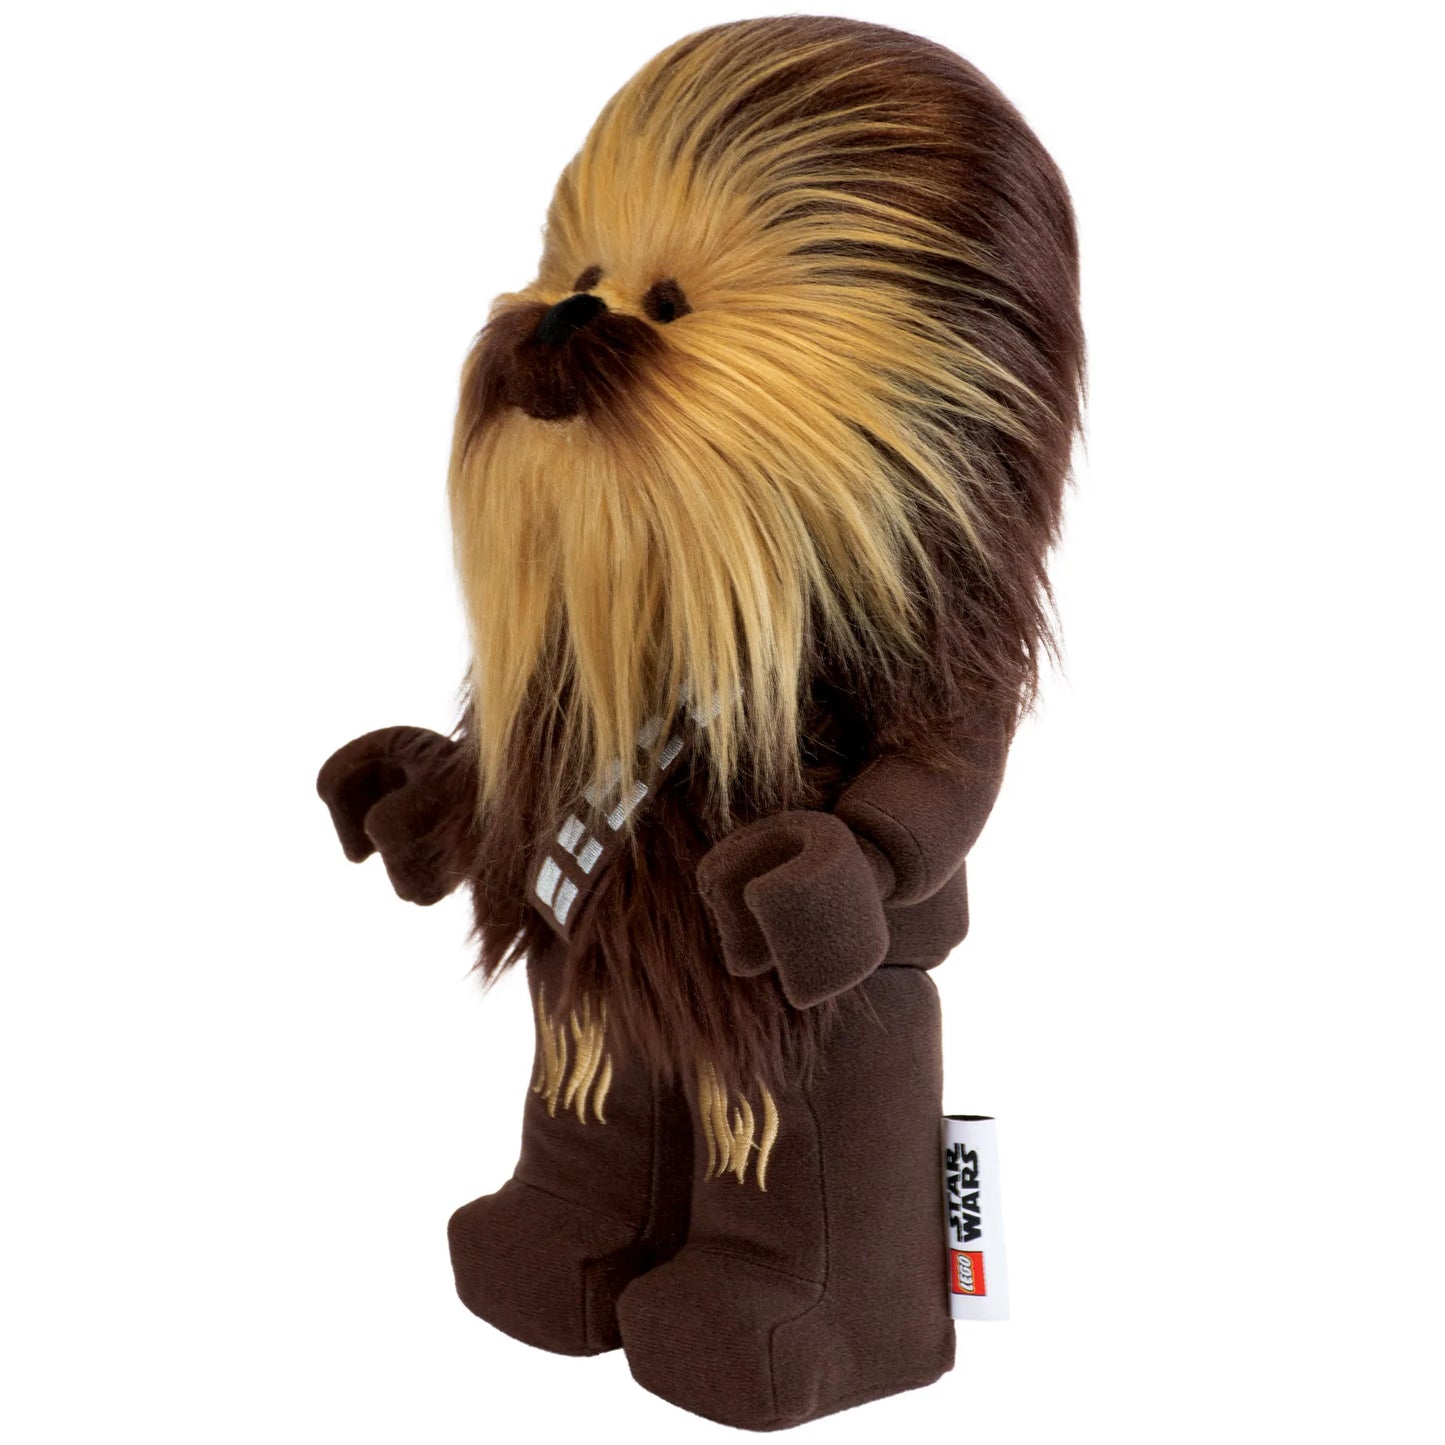 Lego Star Wars Chewbacca Plush Toy